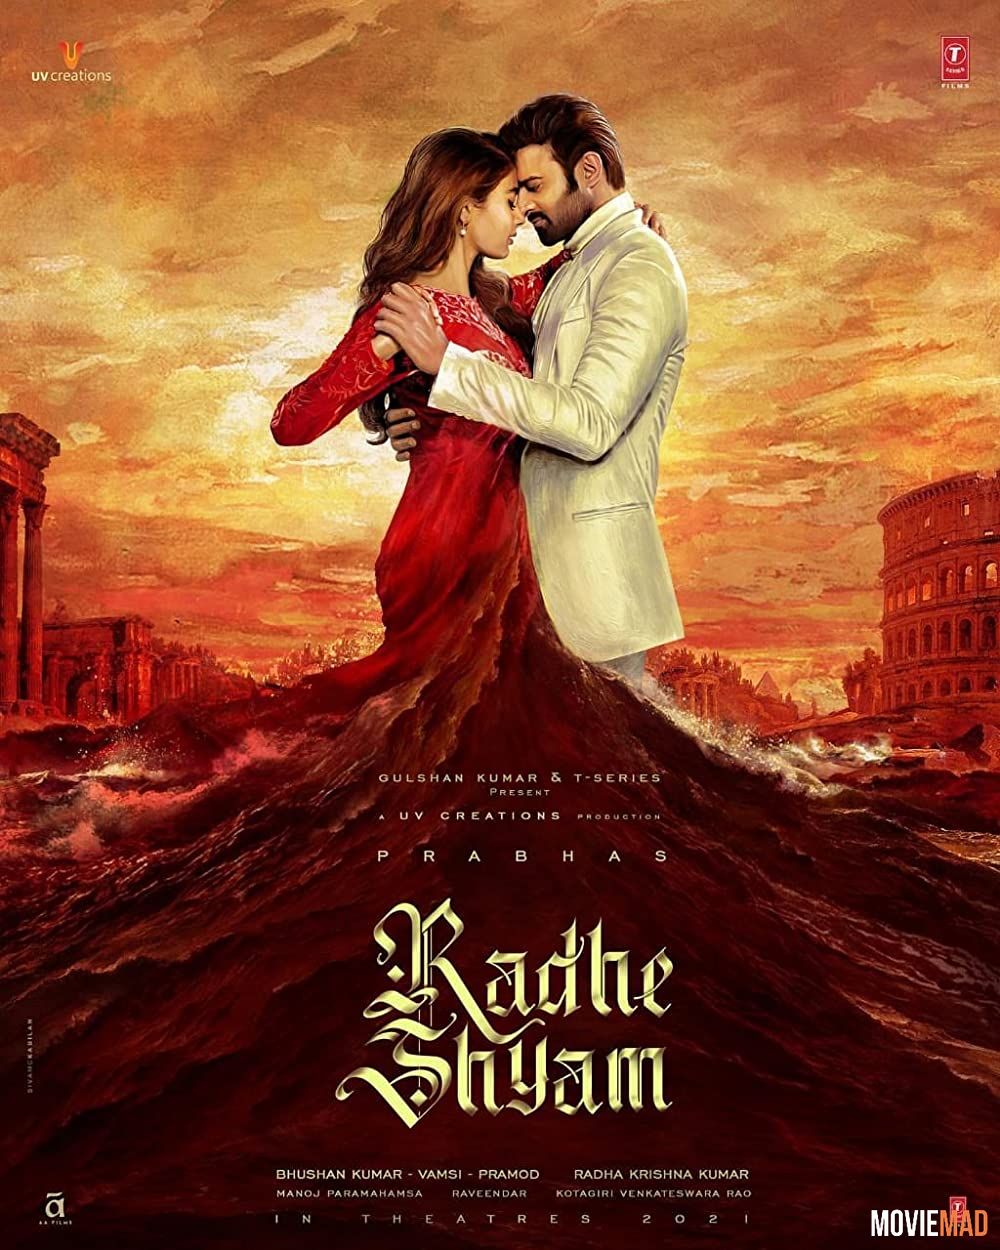 Radhe Shyam (2022) Hindi Dubbed ORG HDRip Netflix Full Movie 1080p 720p 480p